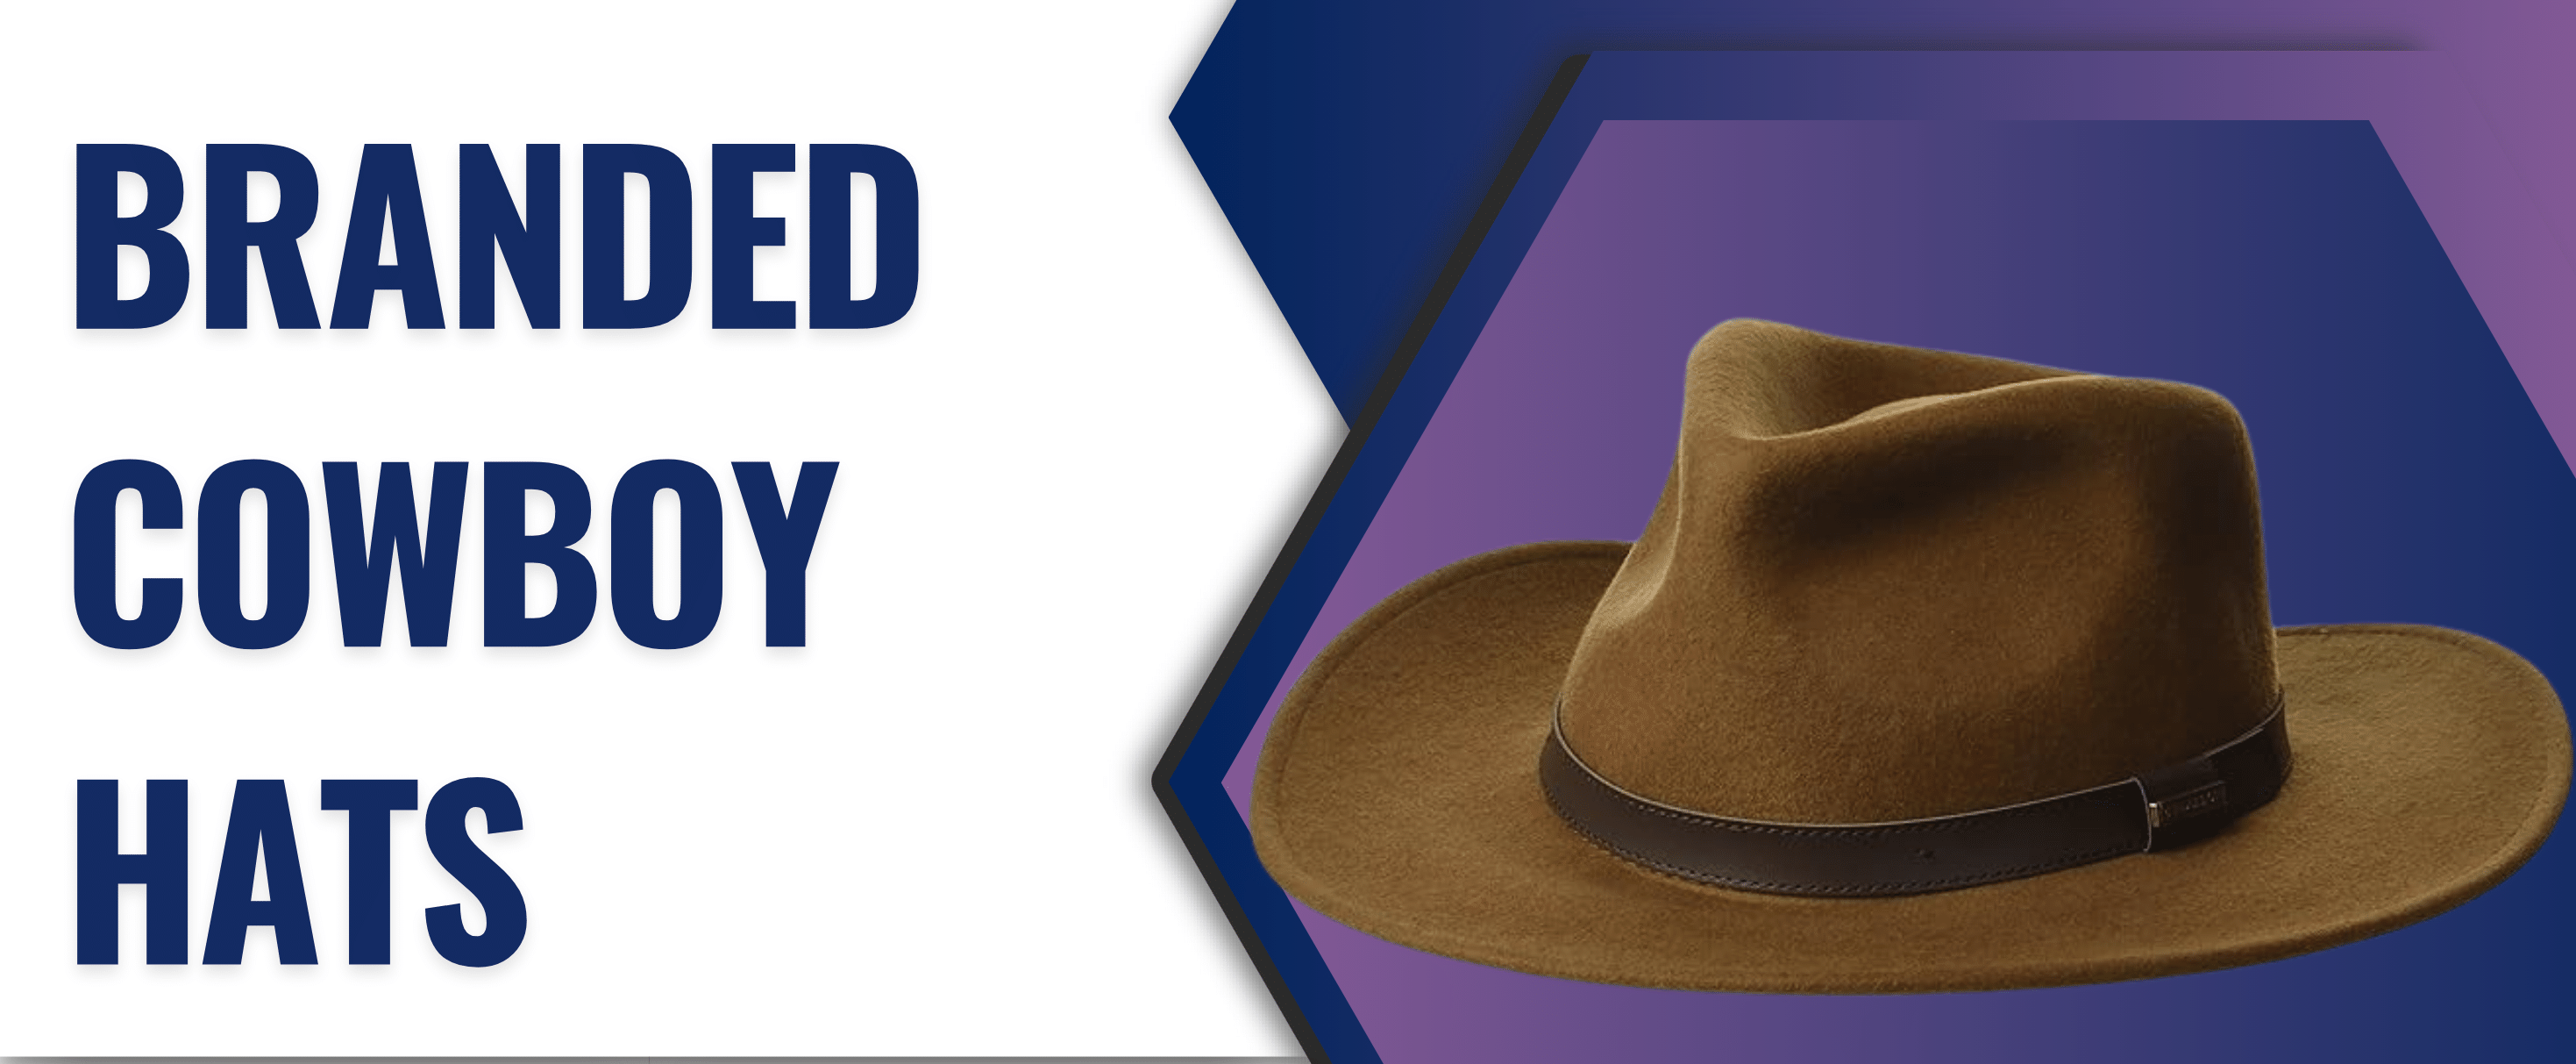 Branded Cowboy Hats